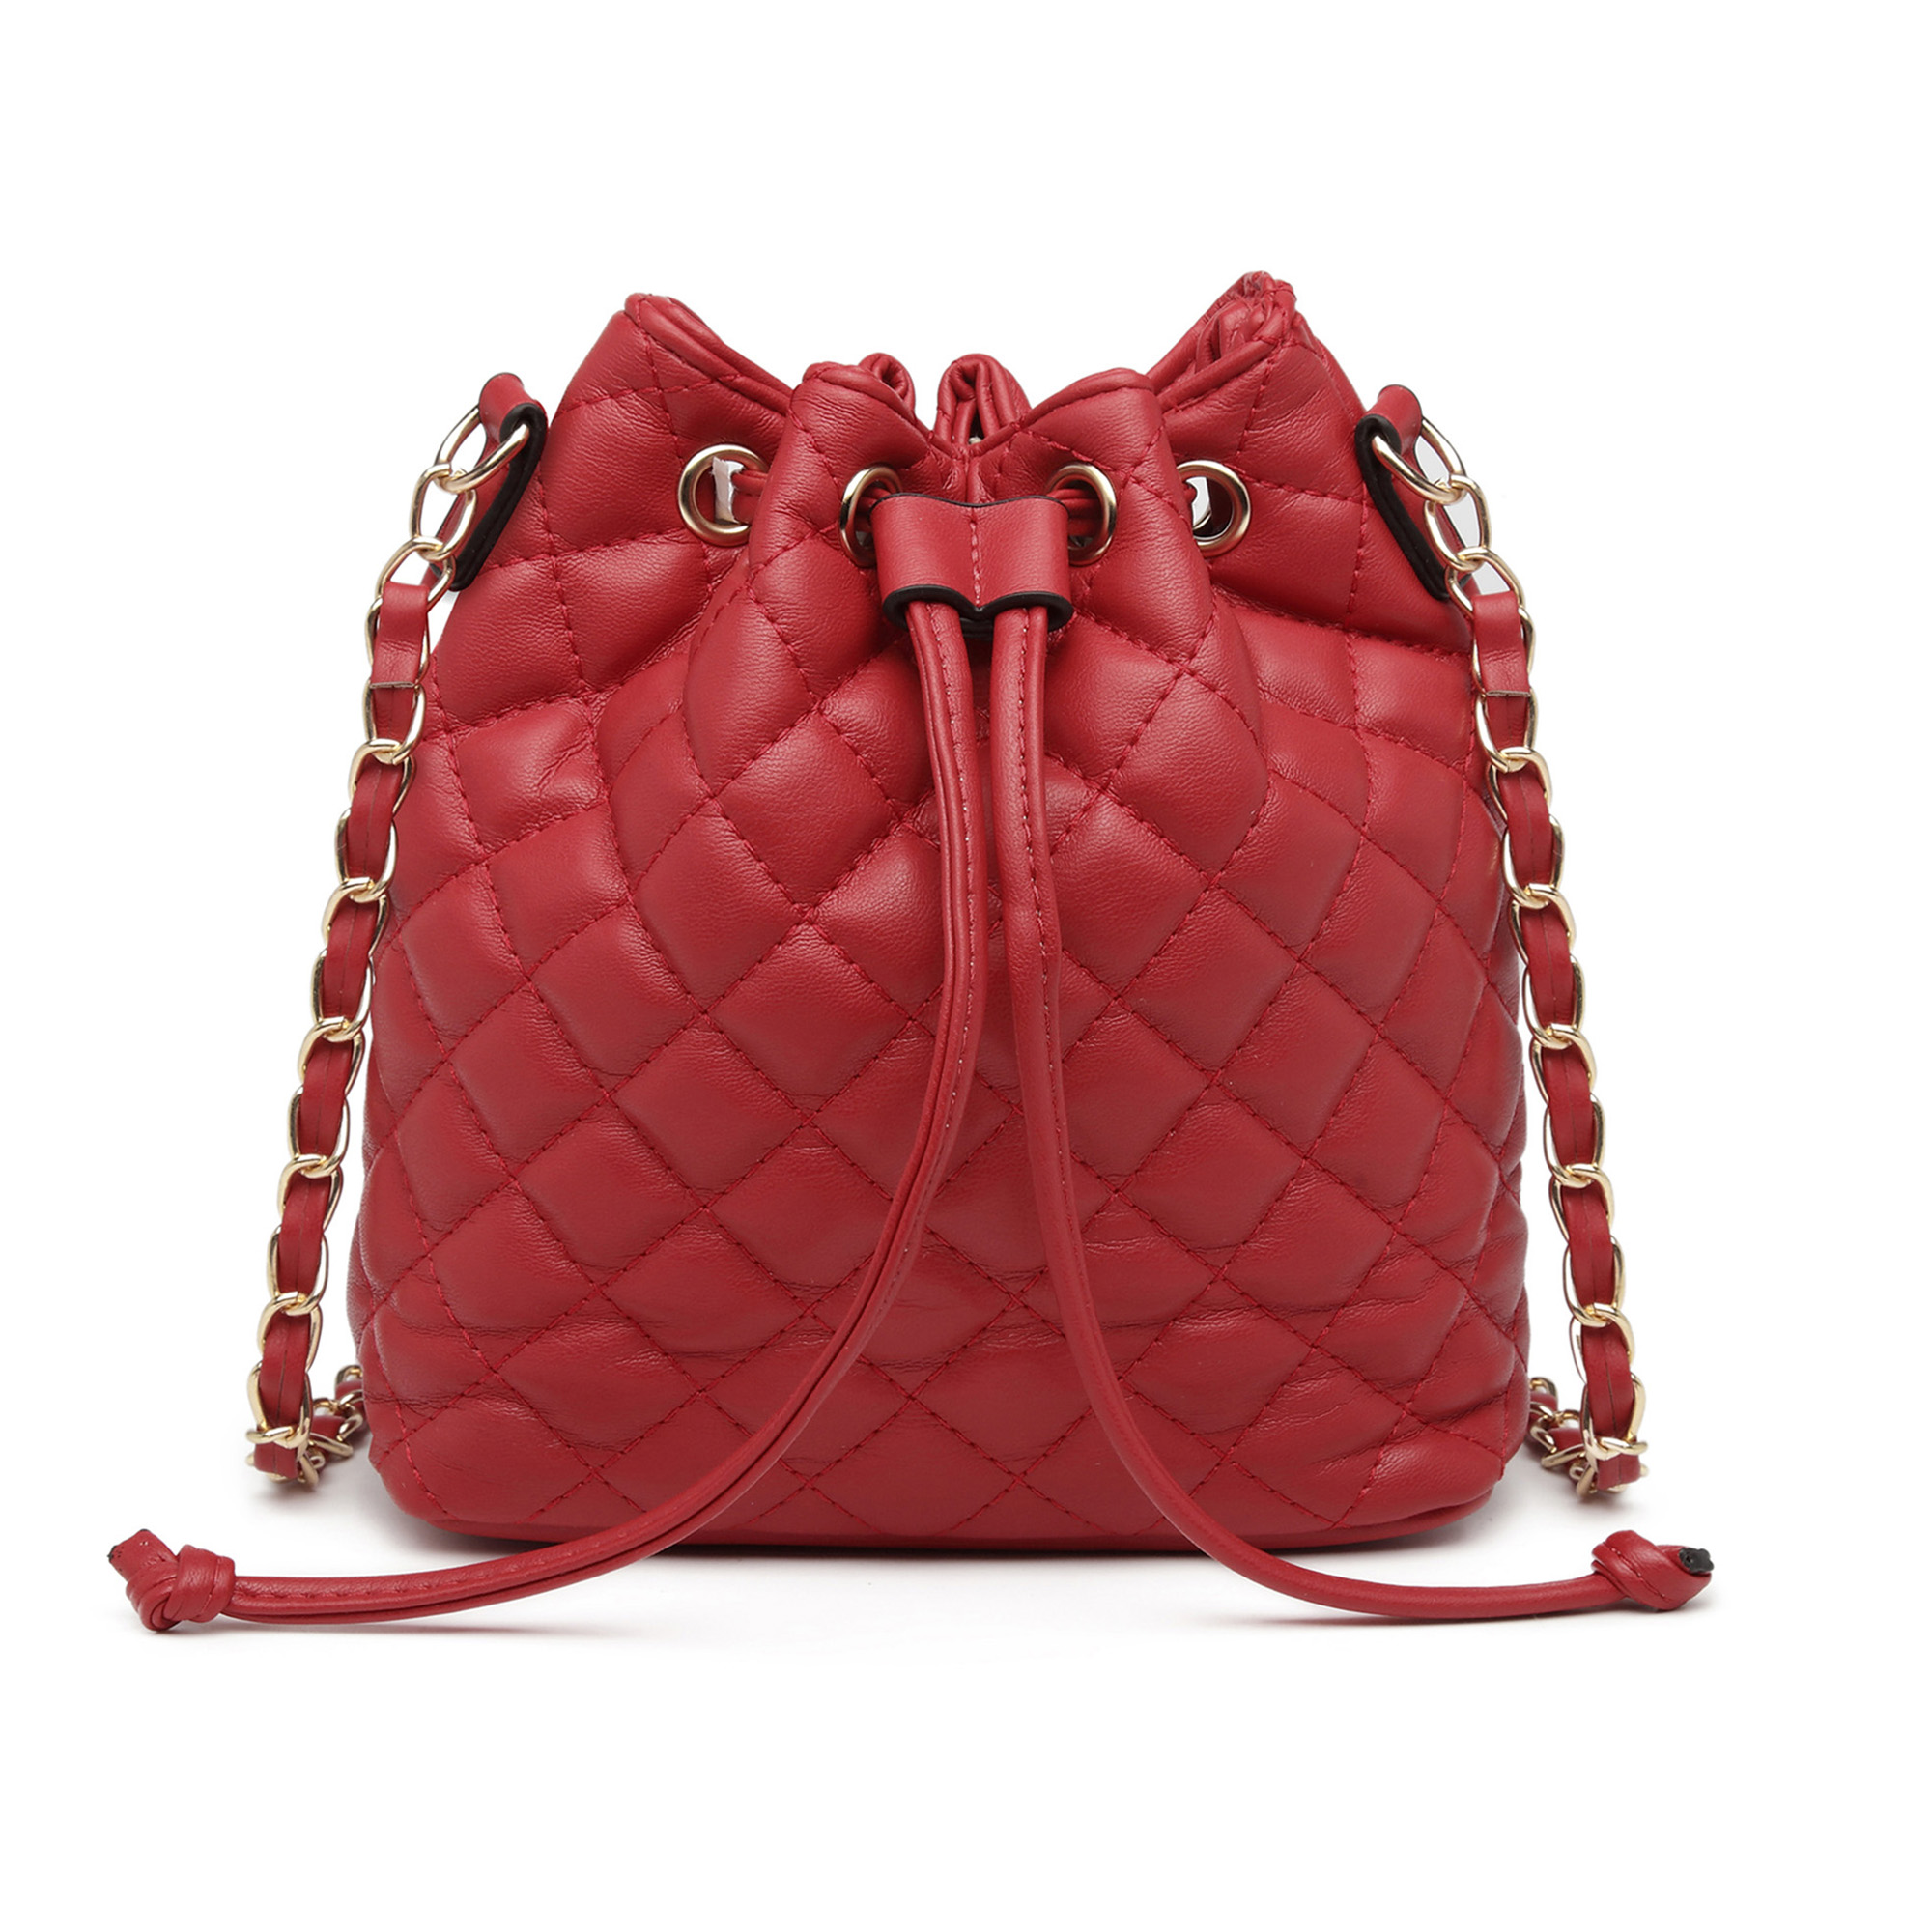 Poppy Womens Leather Quilted Crossbody Bag Handbags Purses Drawstring Bucket Shoulder Bag Satchels Messenger Bag - image 1 of 5